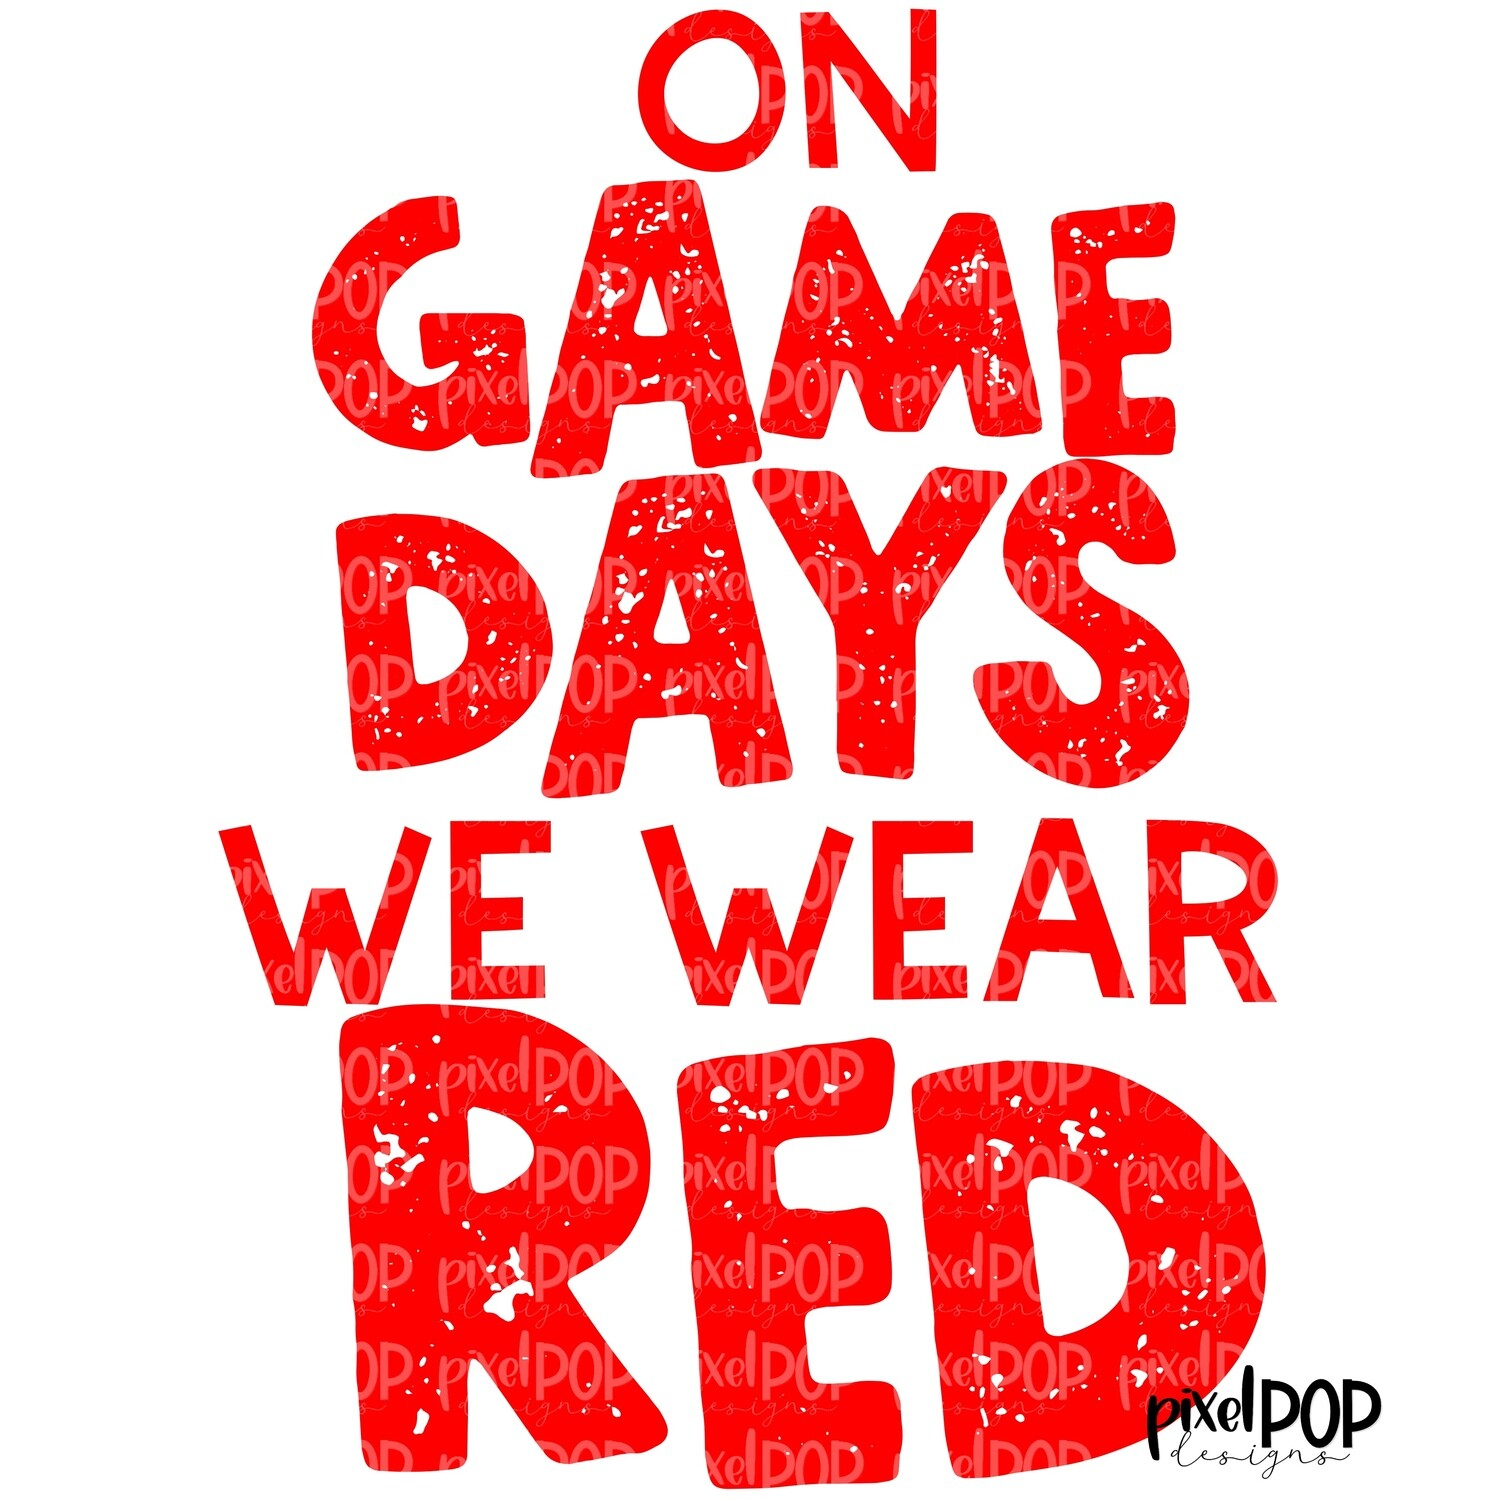 On Game Days We Wear Red PNG | Football Design | Sublimation Design | Heat Transfer | Digital Print | Printable | Clip Art